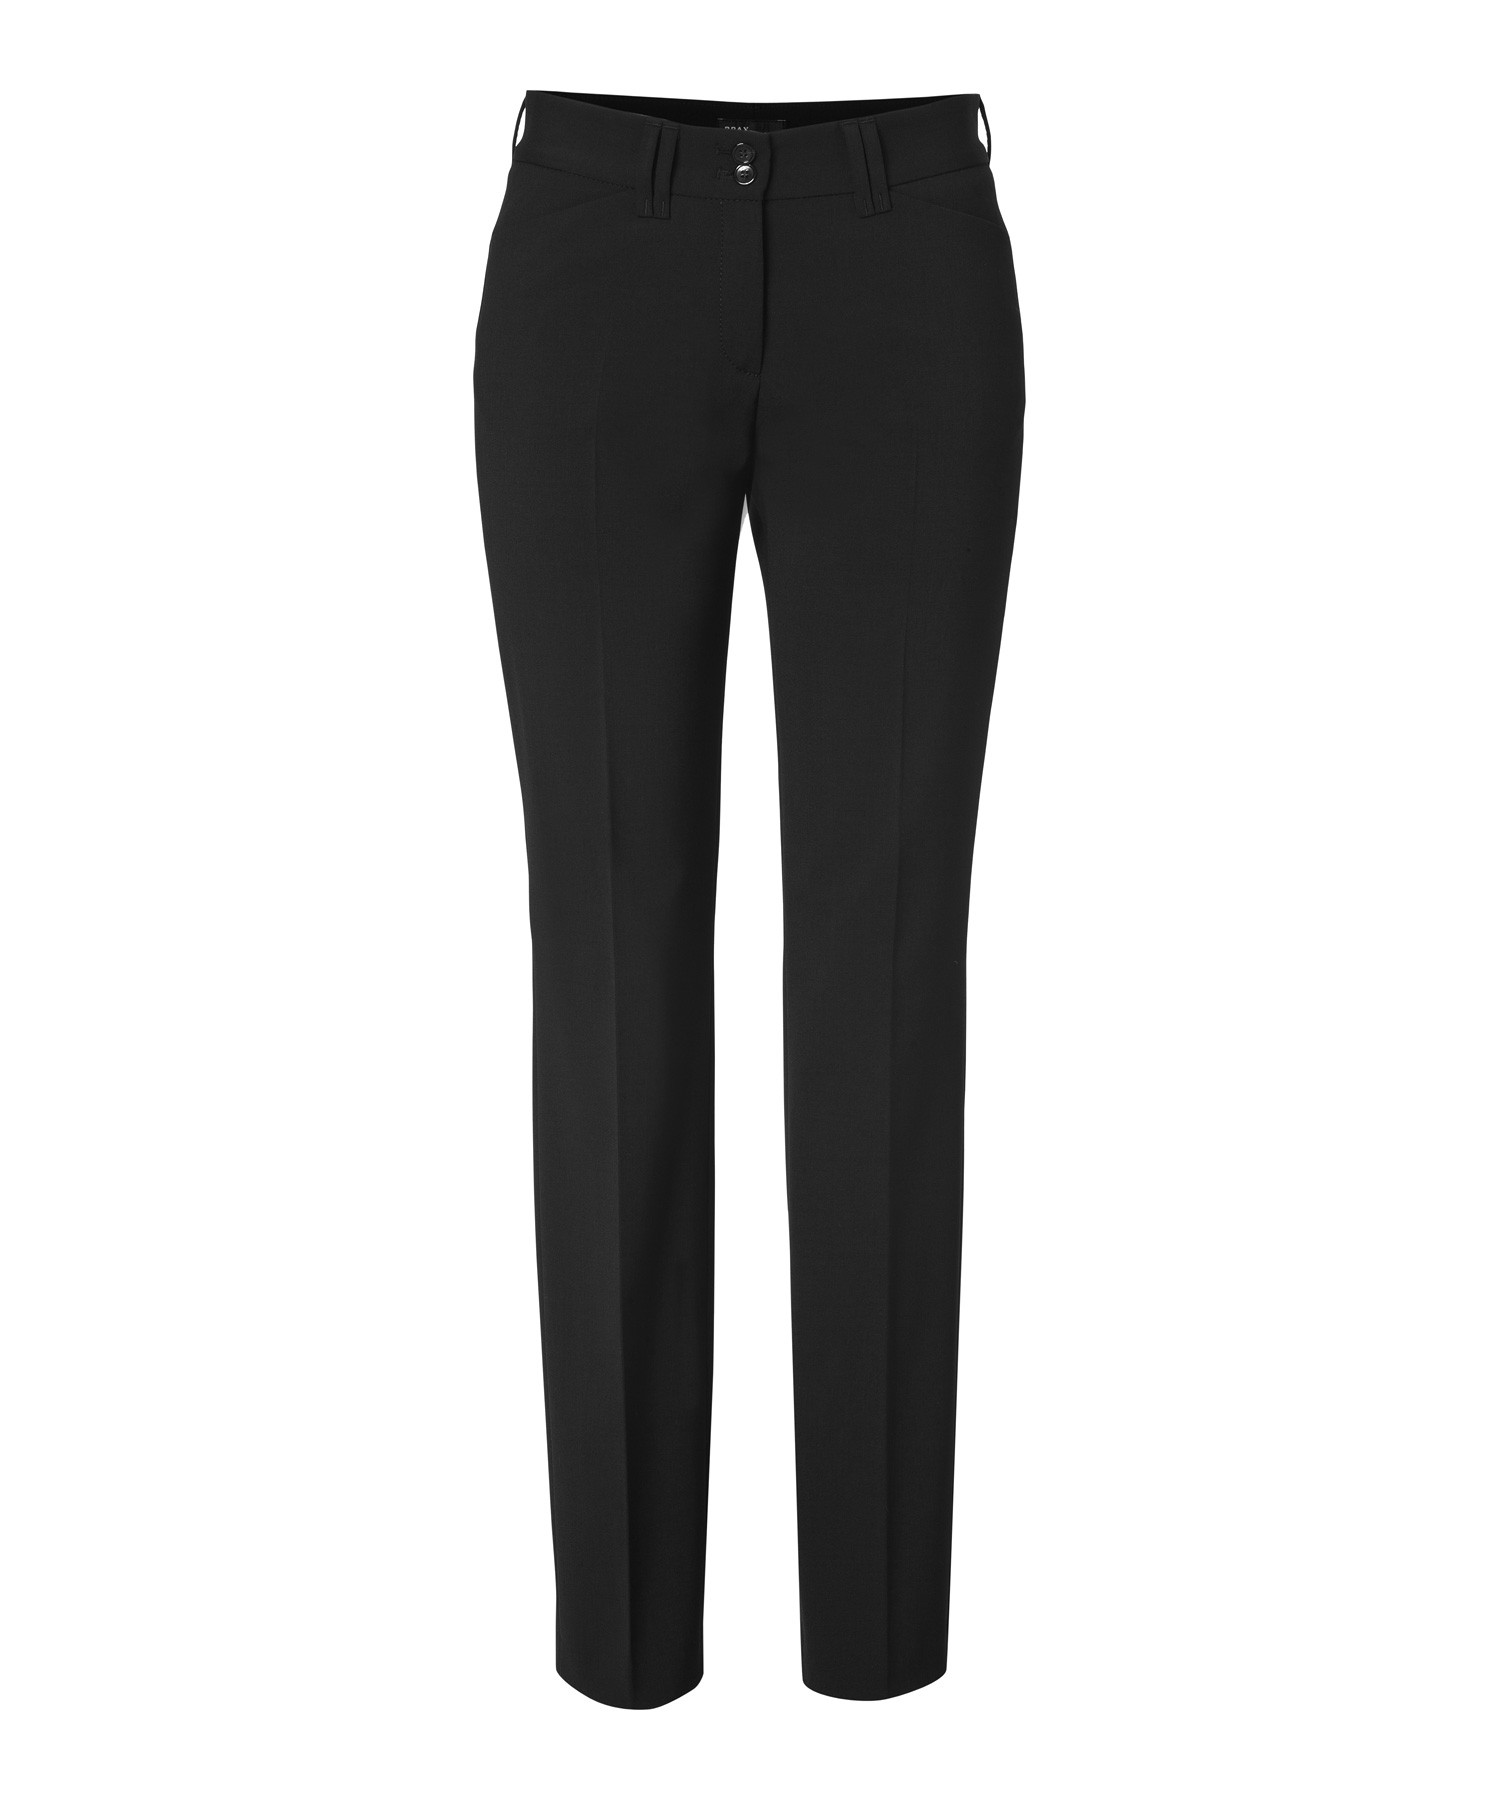 Brax Celine Feminine Fit Trousers Black in Brax Clothing Range